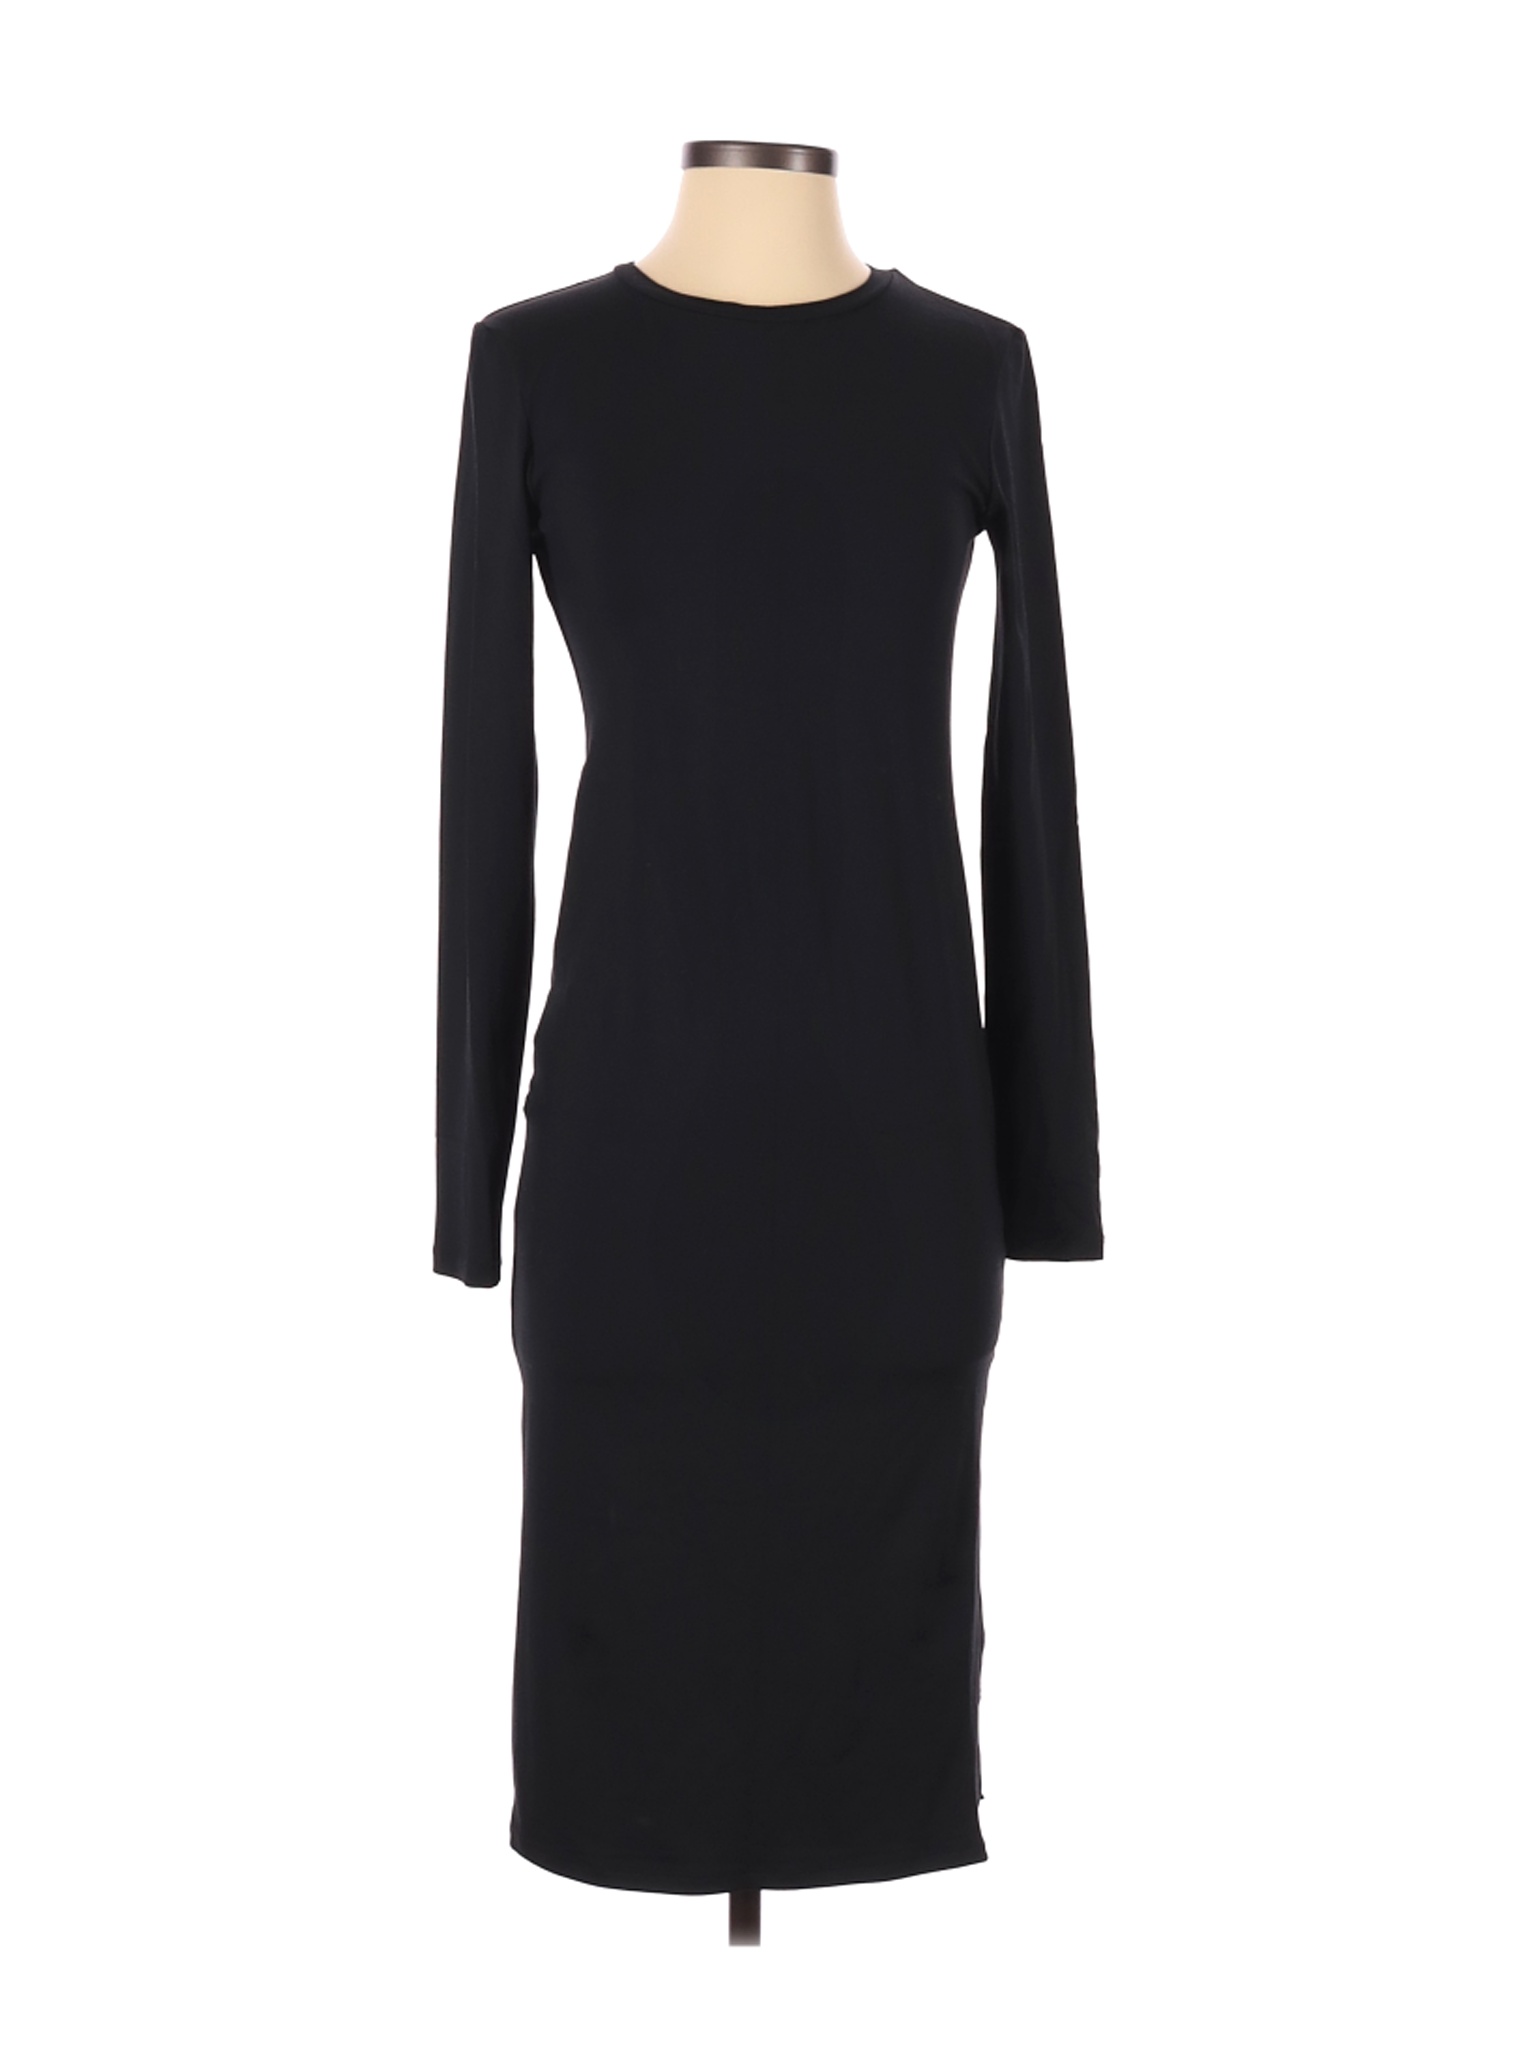 Leith Women Black Casual Dress S | eBay